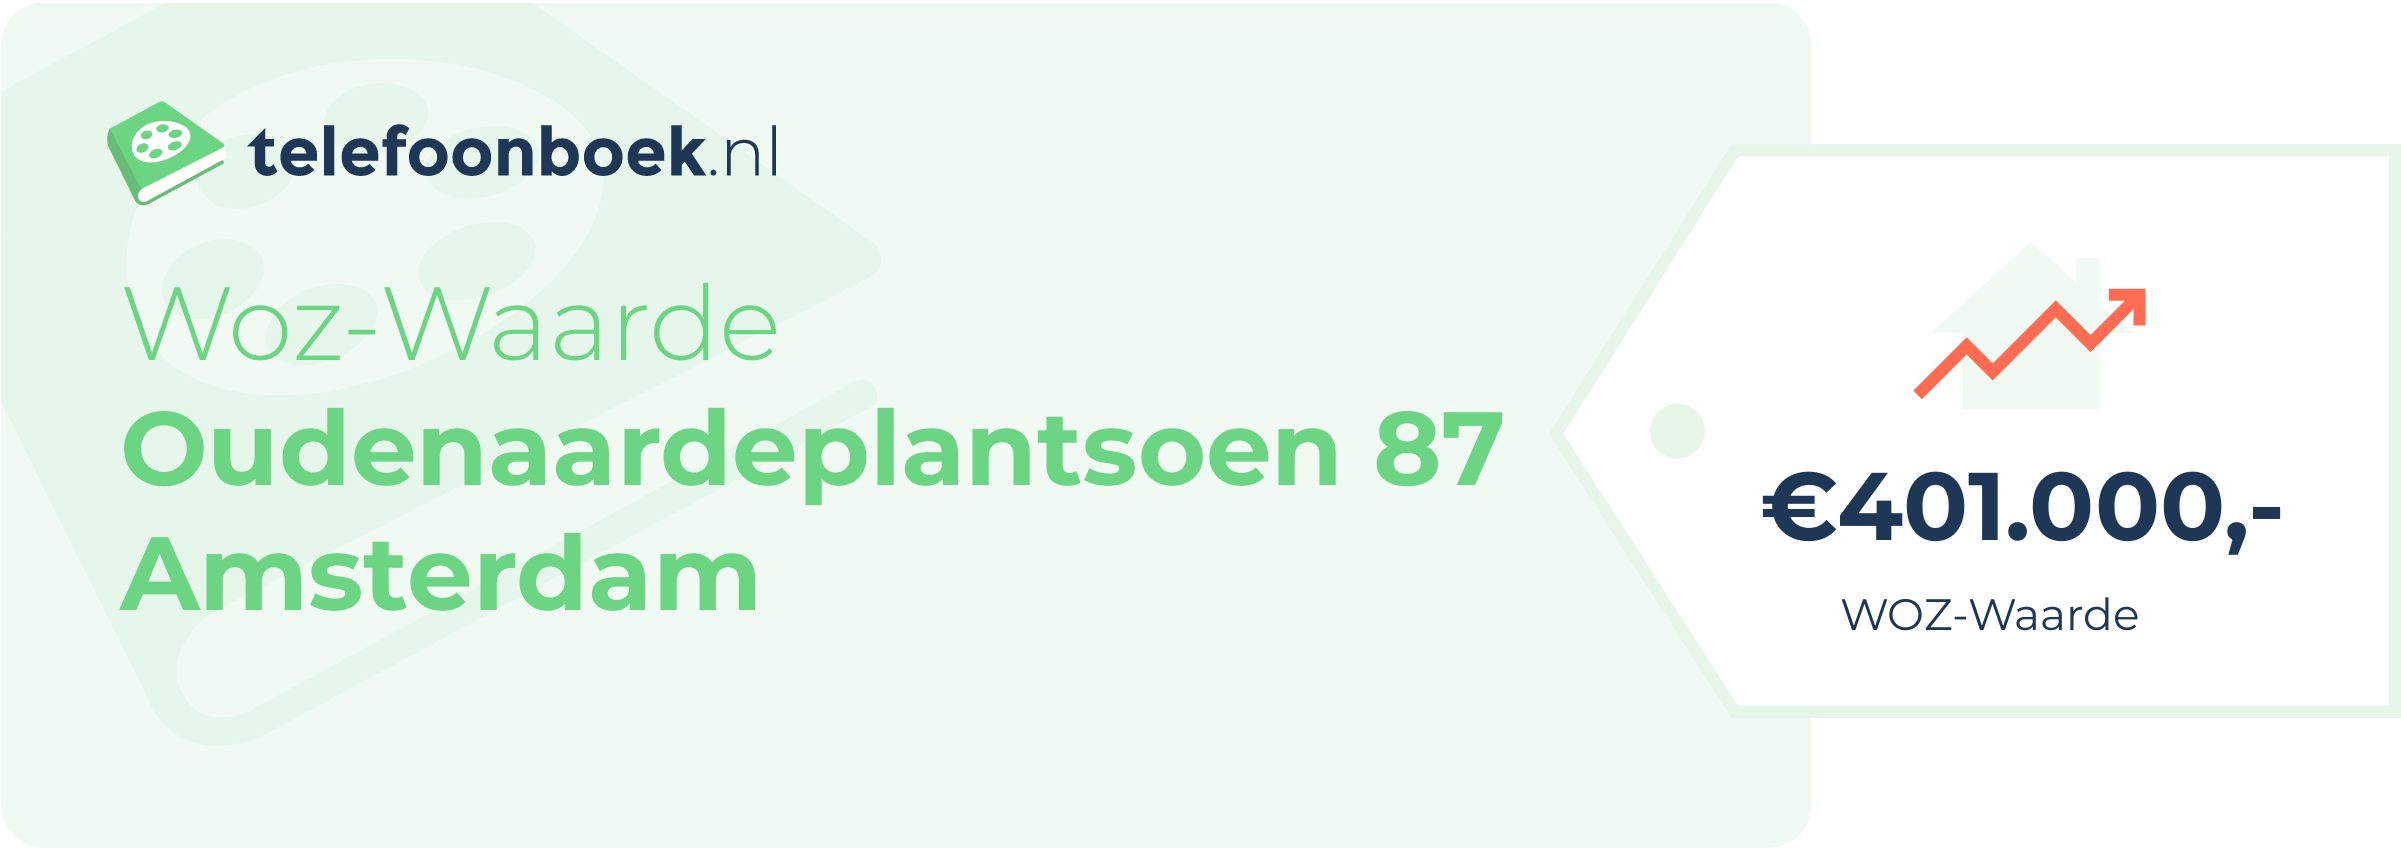 WOZ-waarde Oudenaardeplantsoen 87 Amsterdam